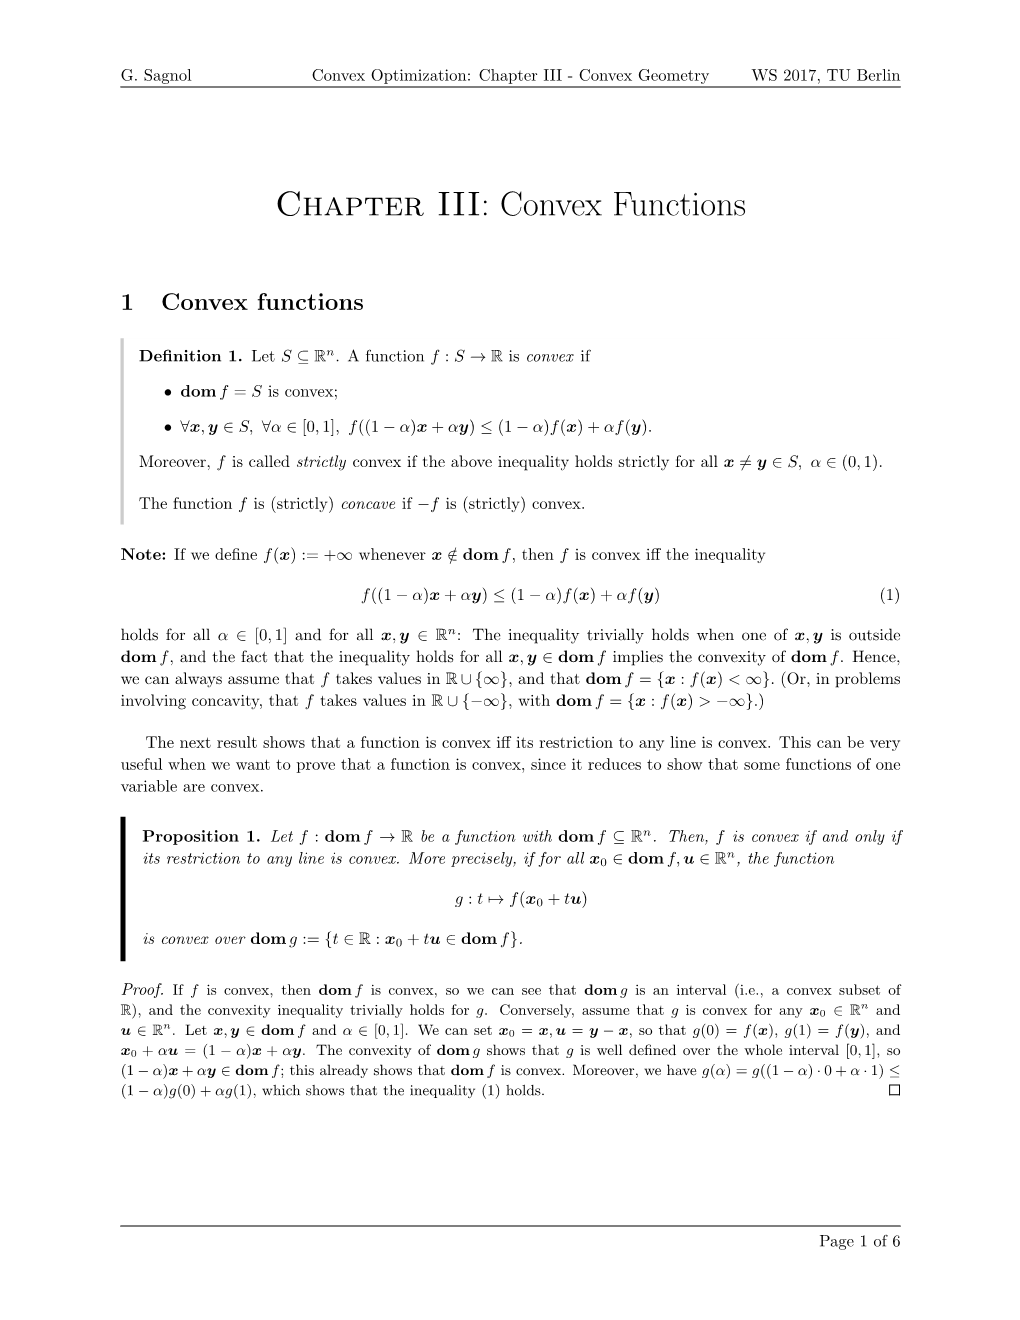 Chapter III: Convex Functions